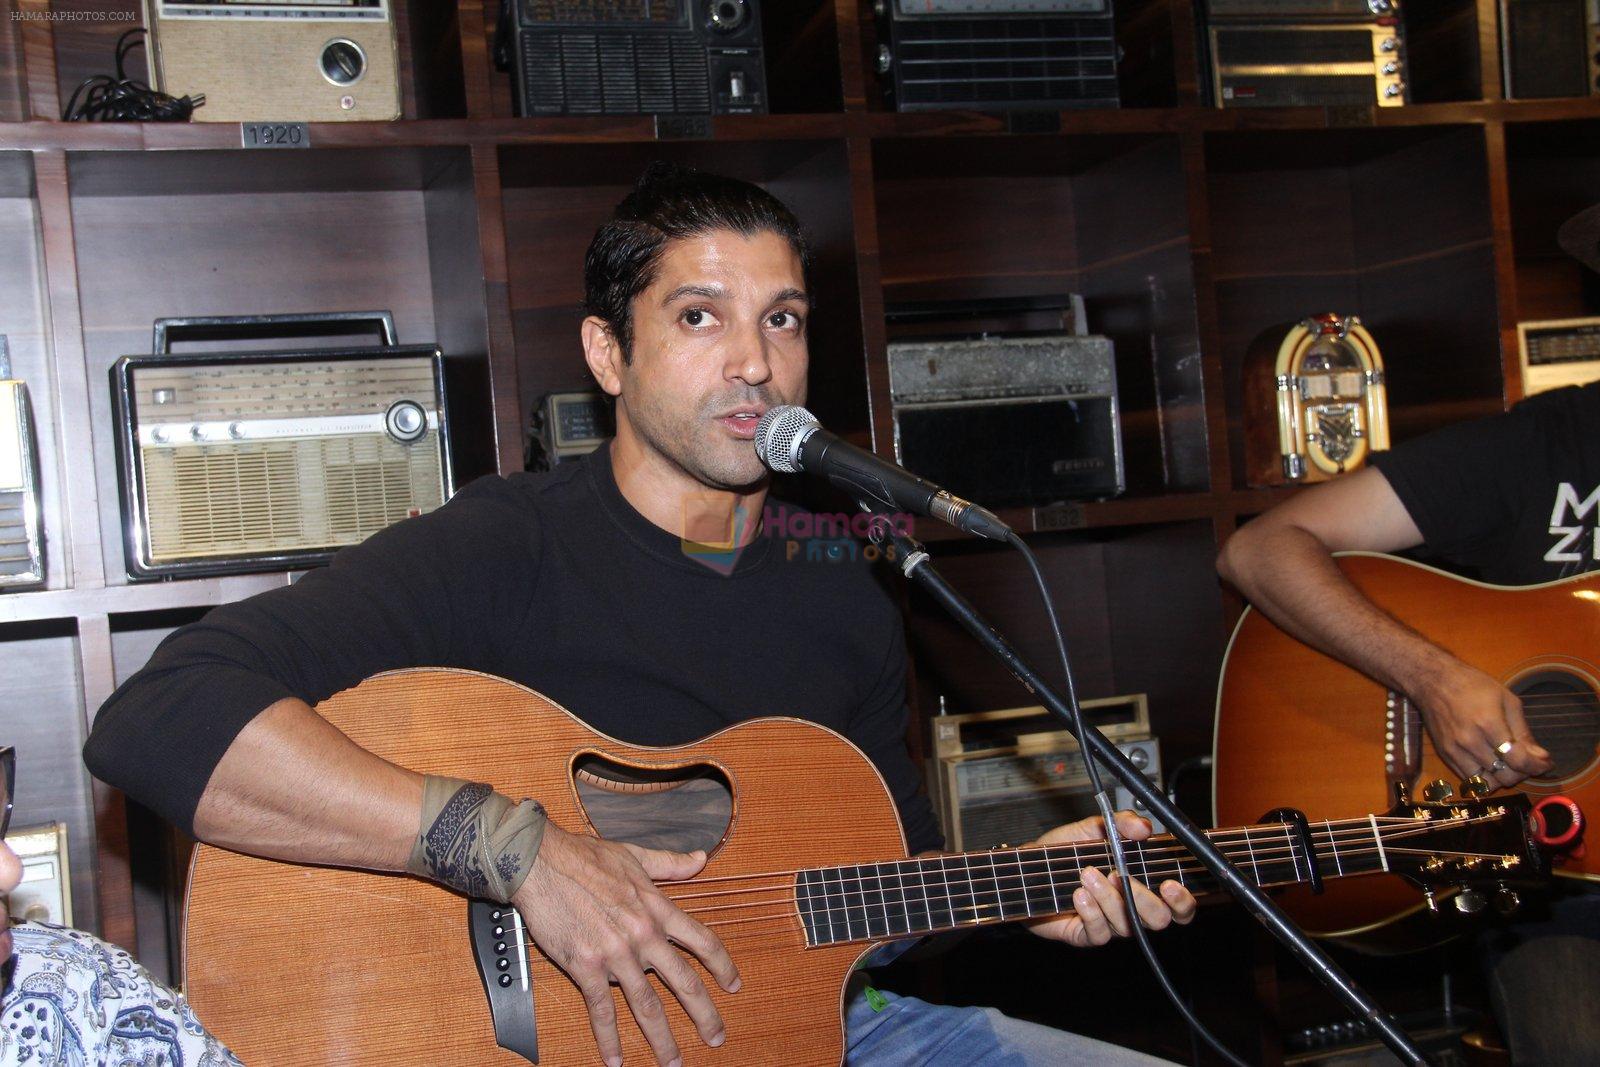 Farhan Akhtar does an impromptu gig at Radio Bar in Mumbai on 14th April 2016